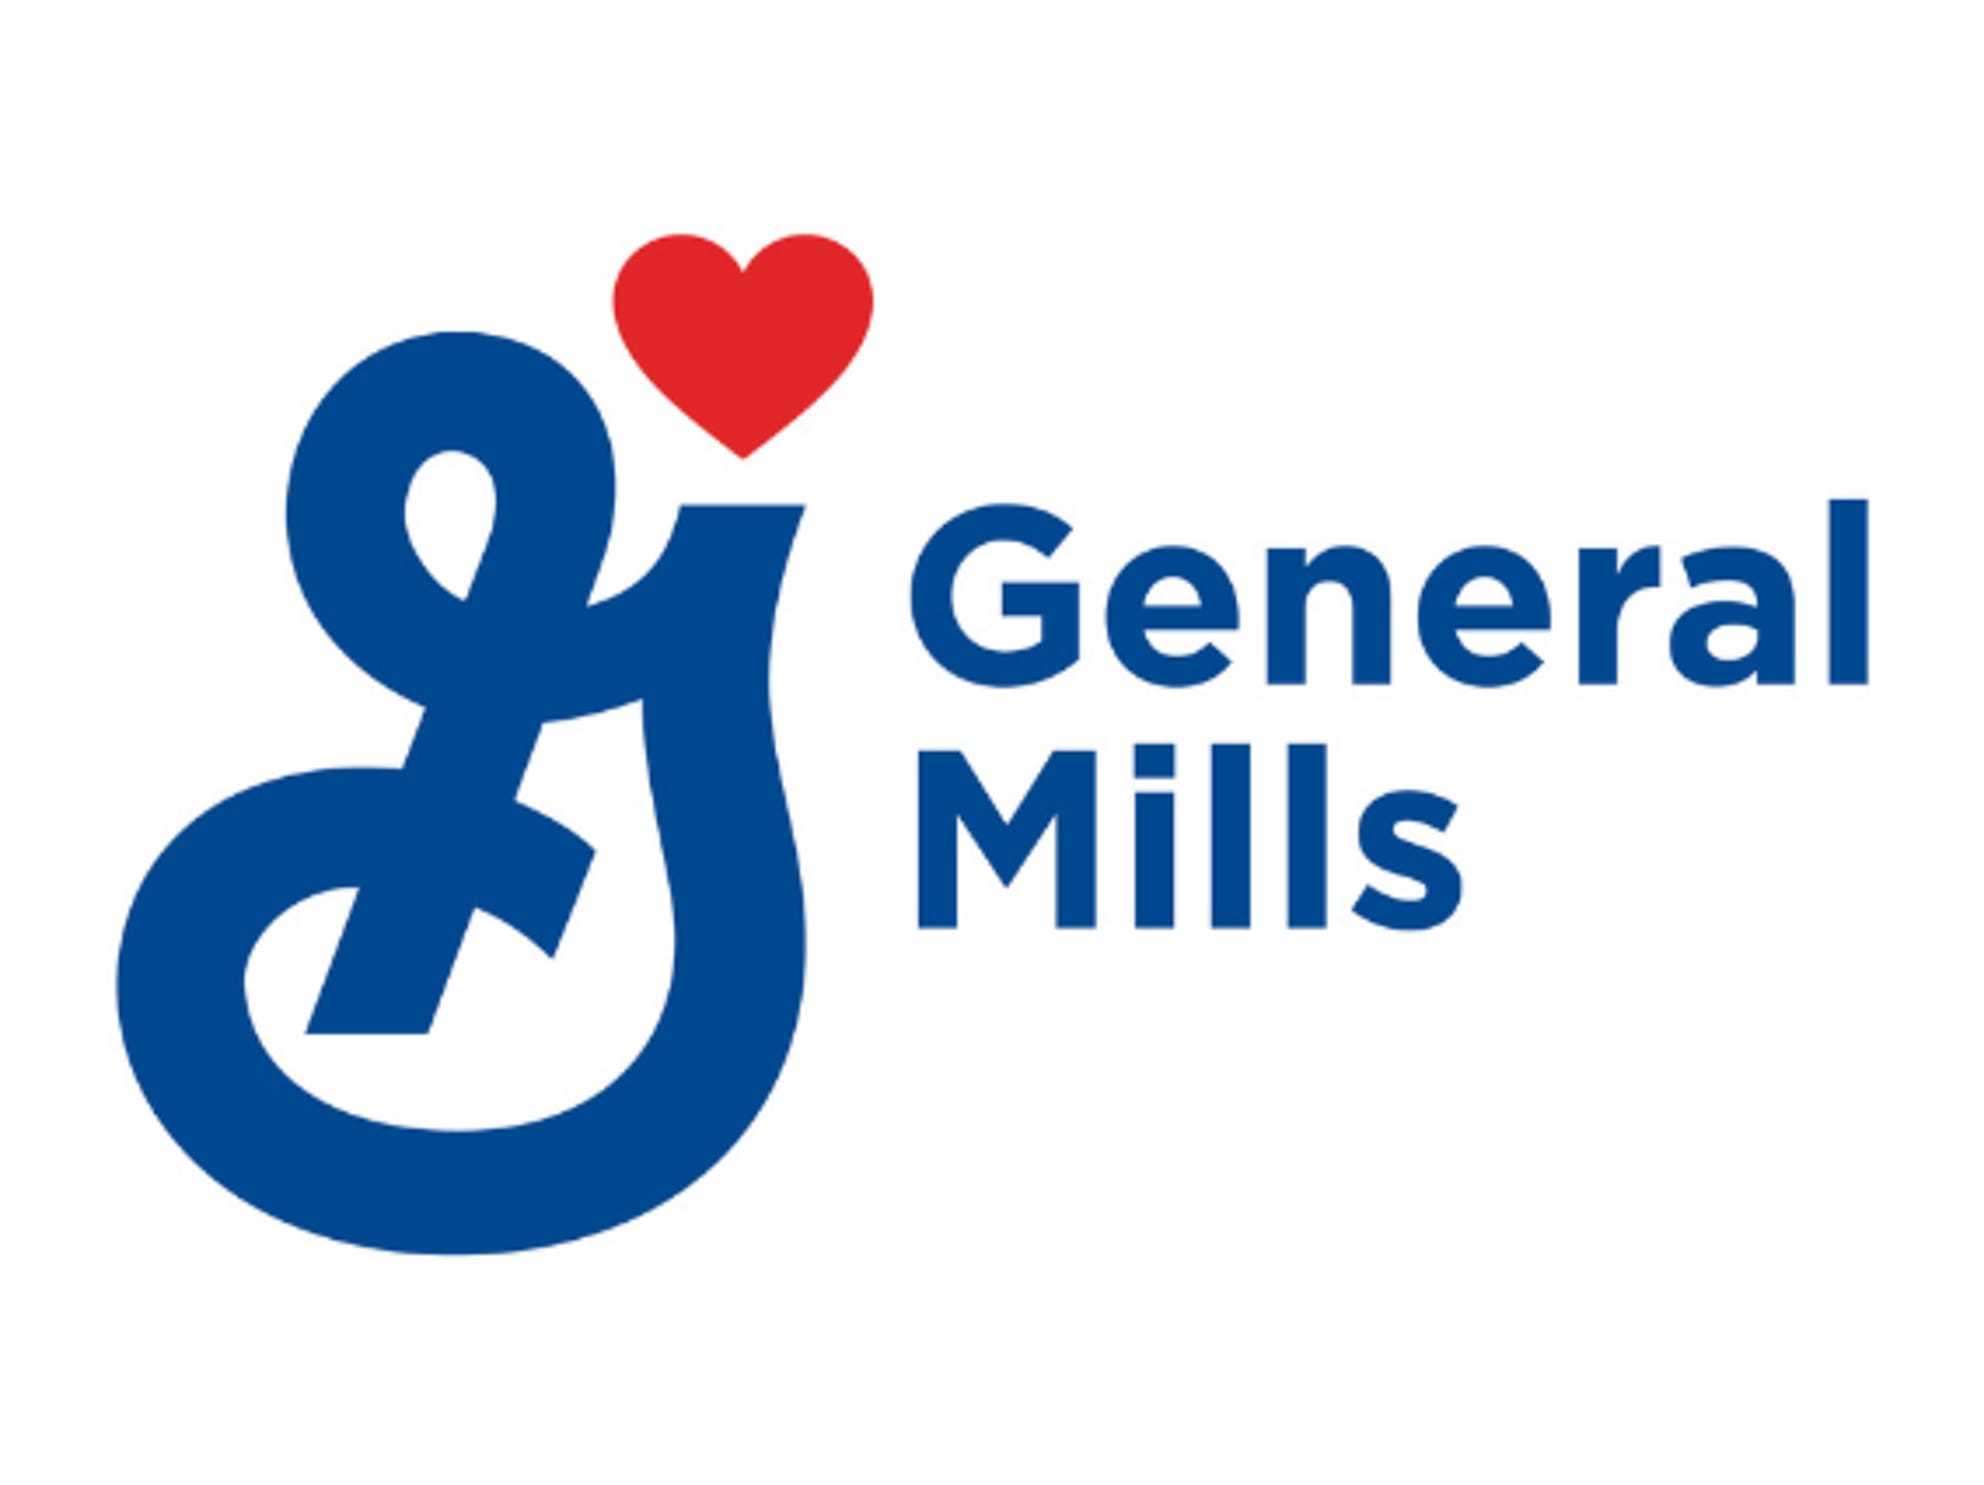 General Mills name and logo